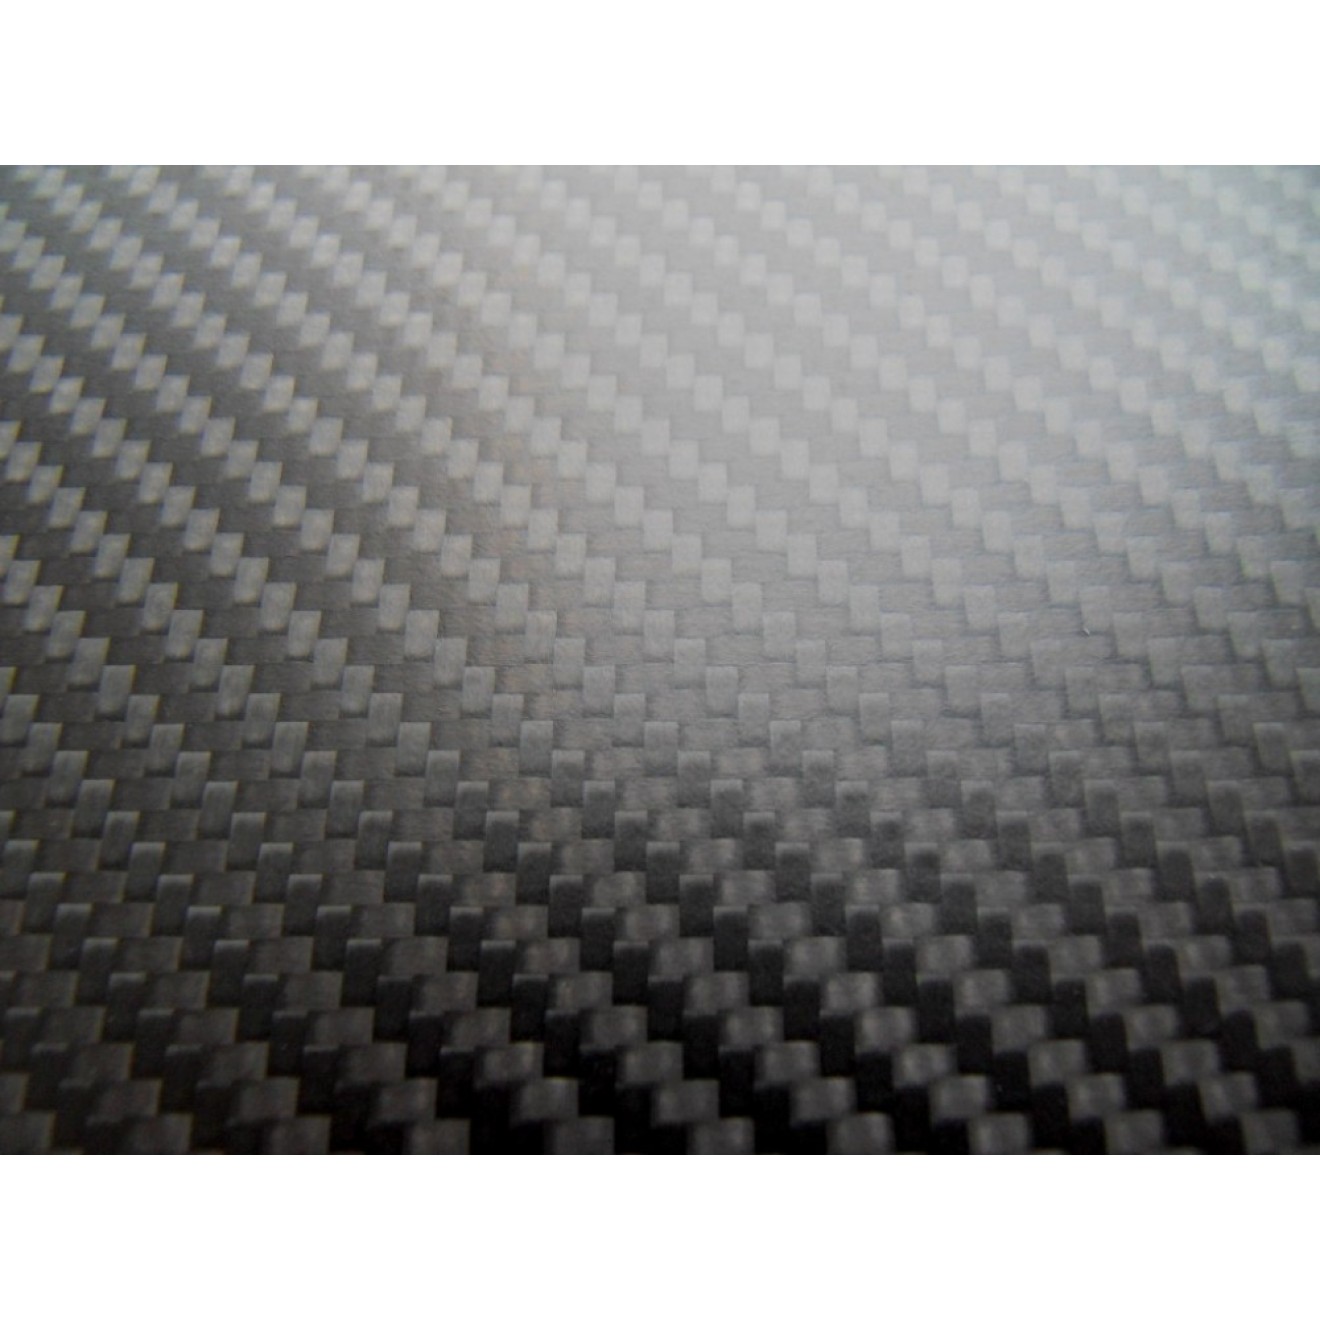 Xellentic® CF 970x600mm, surface matt finish